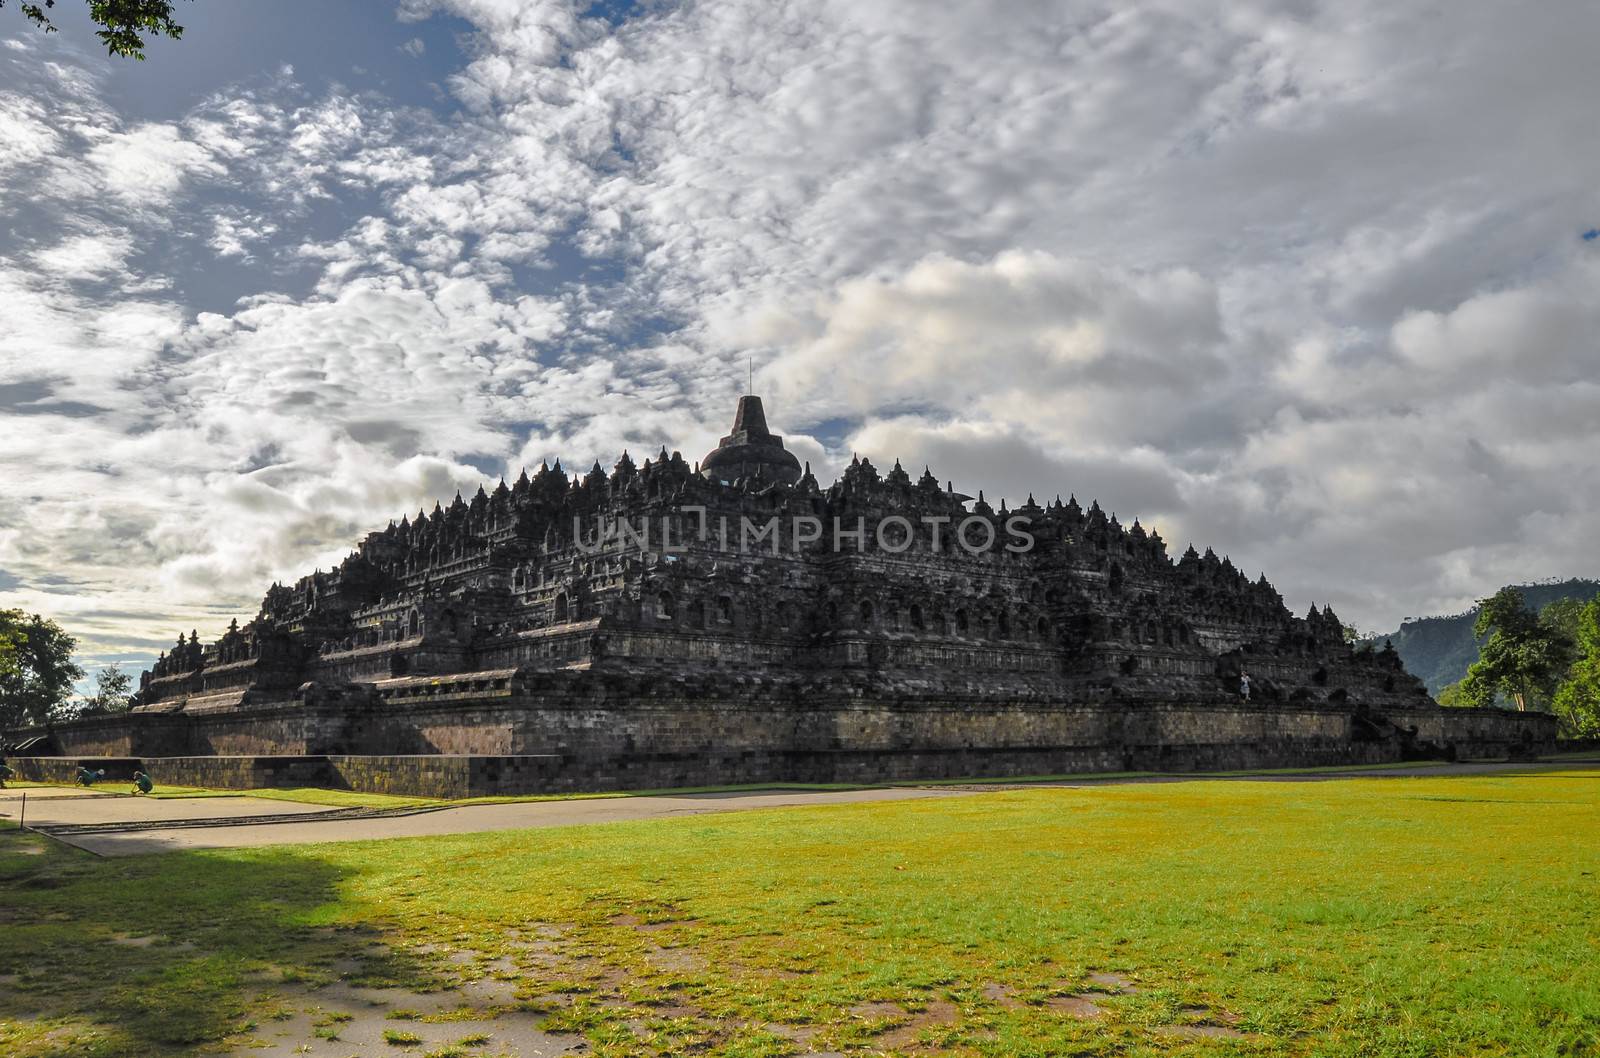 Buddist temple Borobudur in Yogjakarta in Java by weltreisendertj